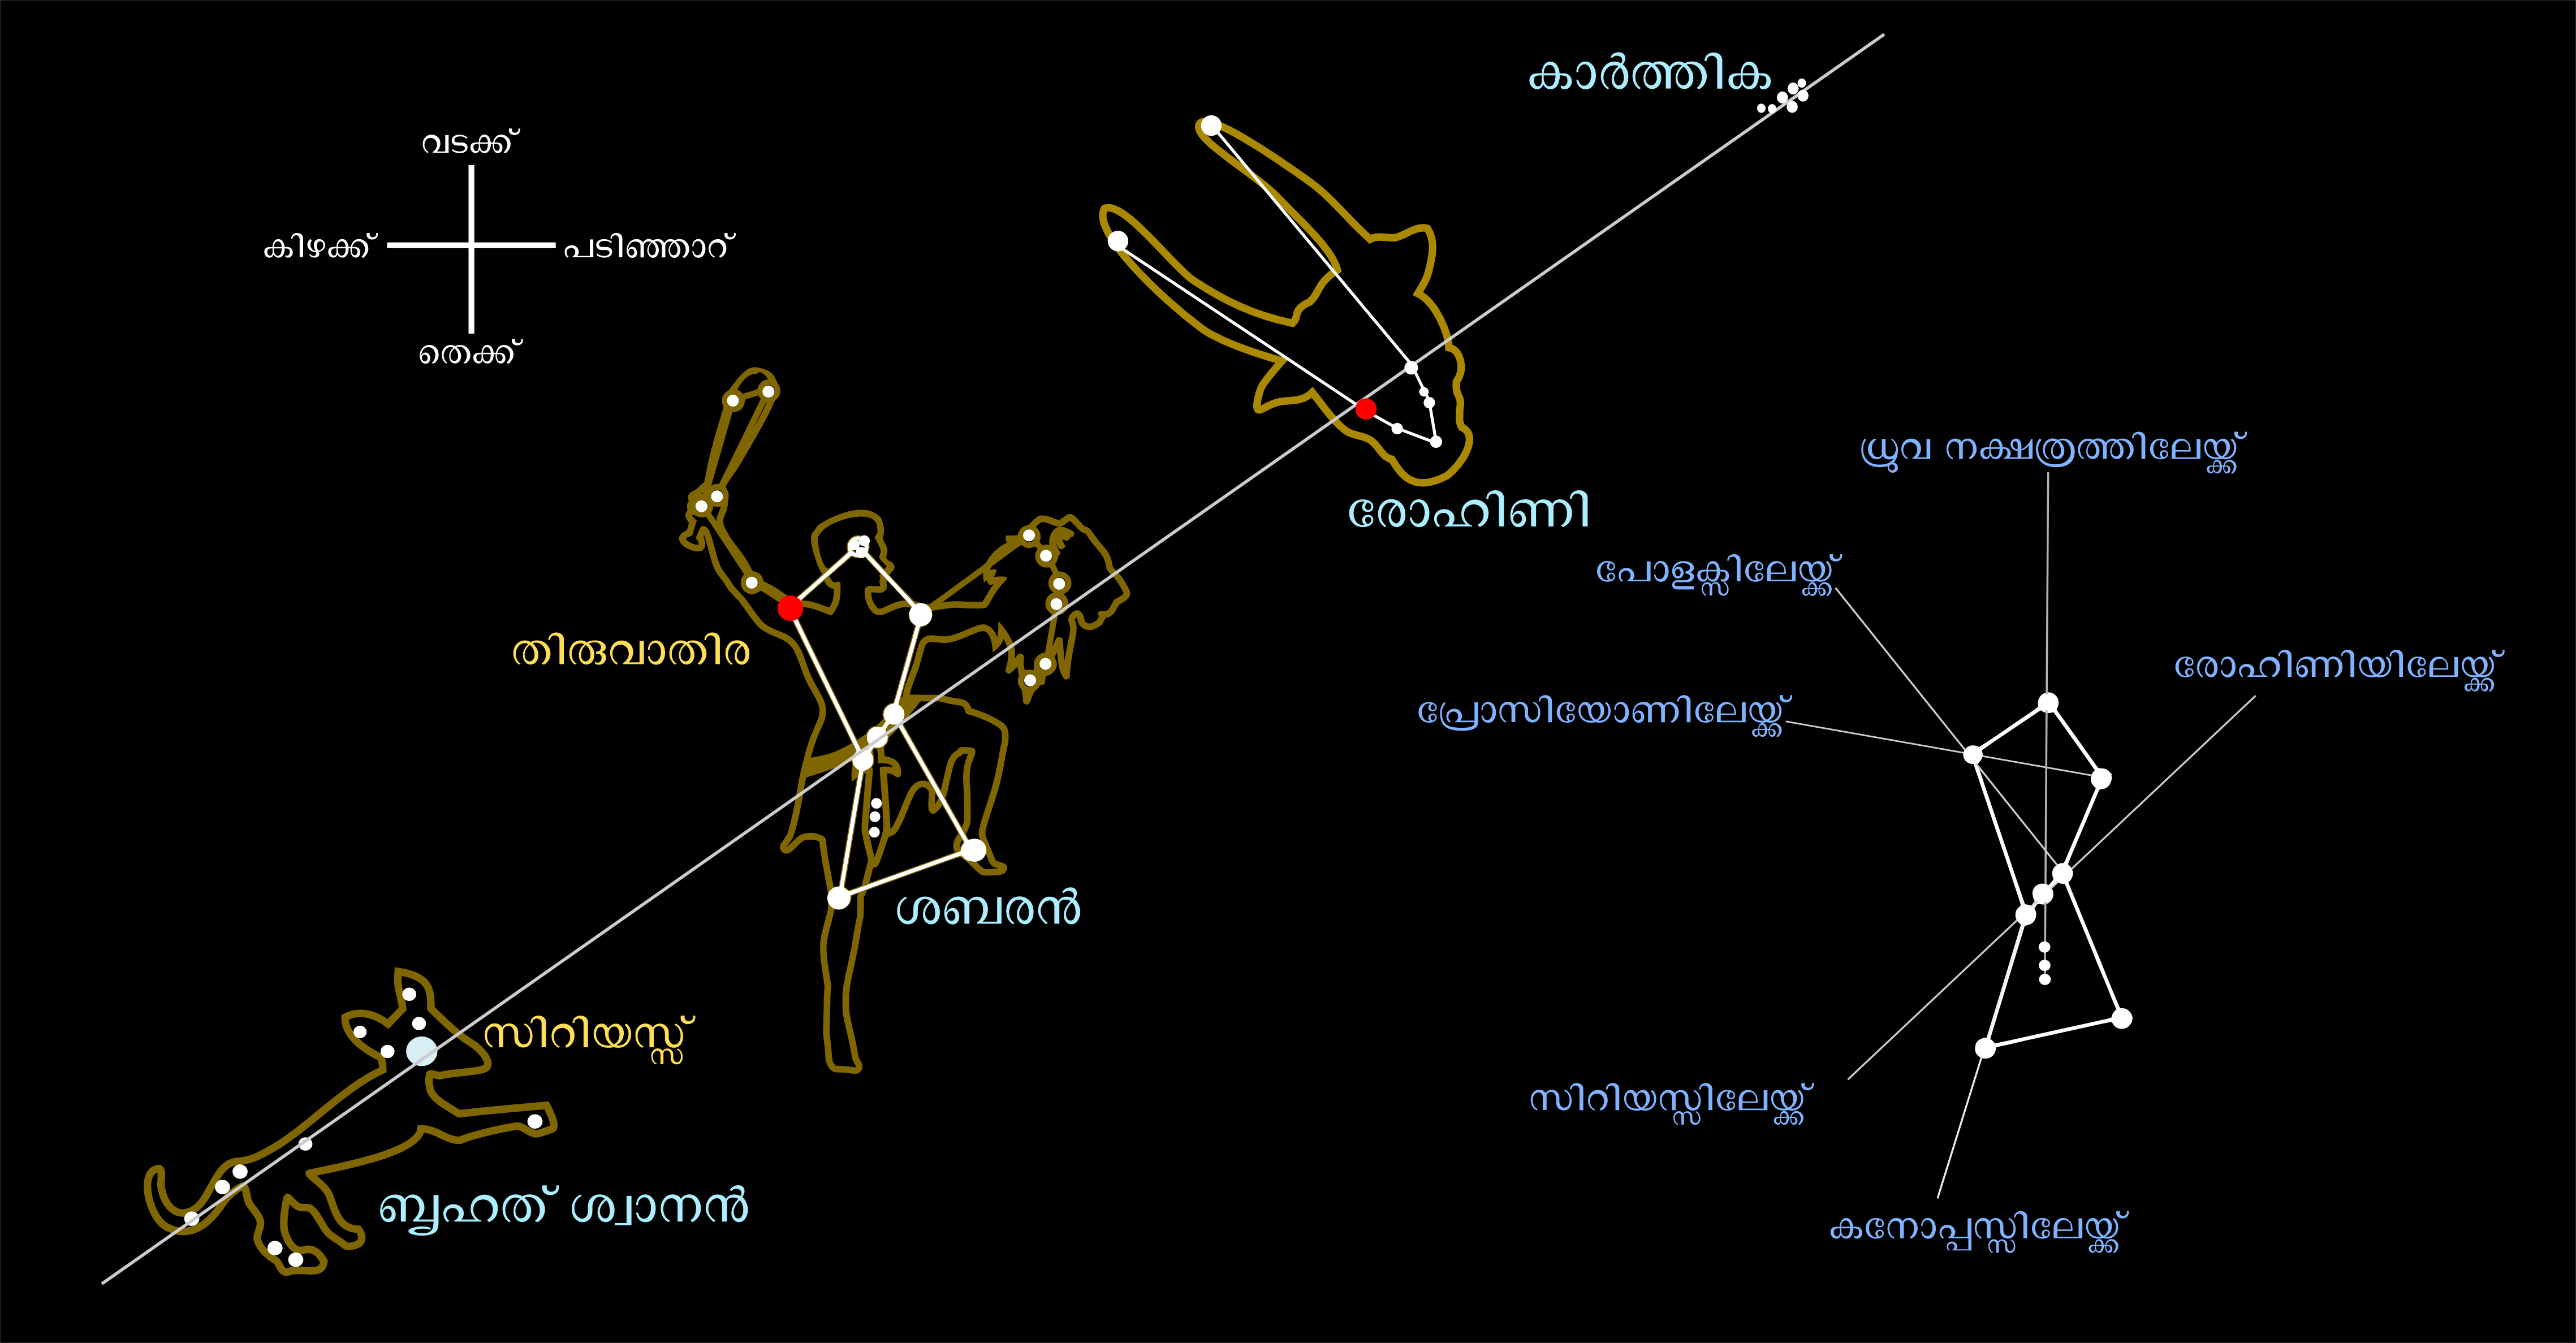 Созвездие орион названо. Созвездие Орион схема. Созвездие Ориона на карте звездного неба. Созвездие Орион схема созвездия. Созвездие Орион схема пояс Ориона.